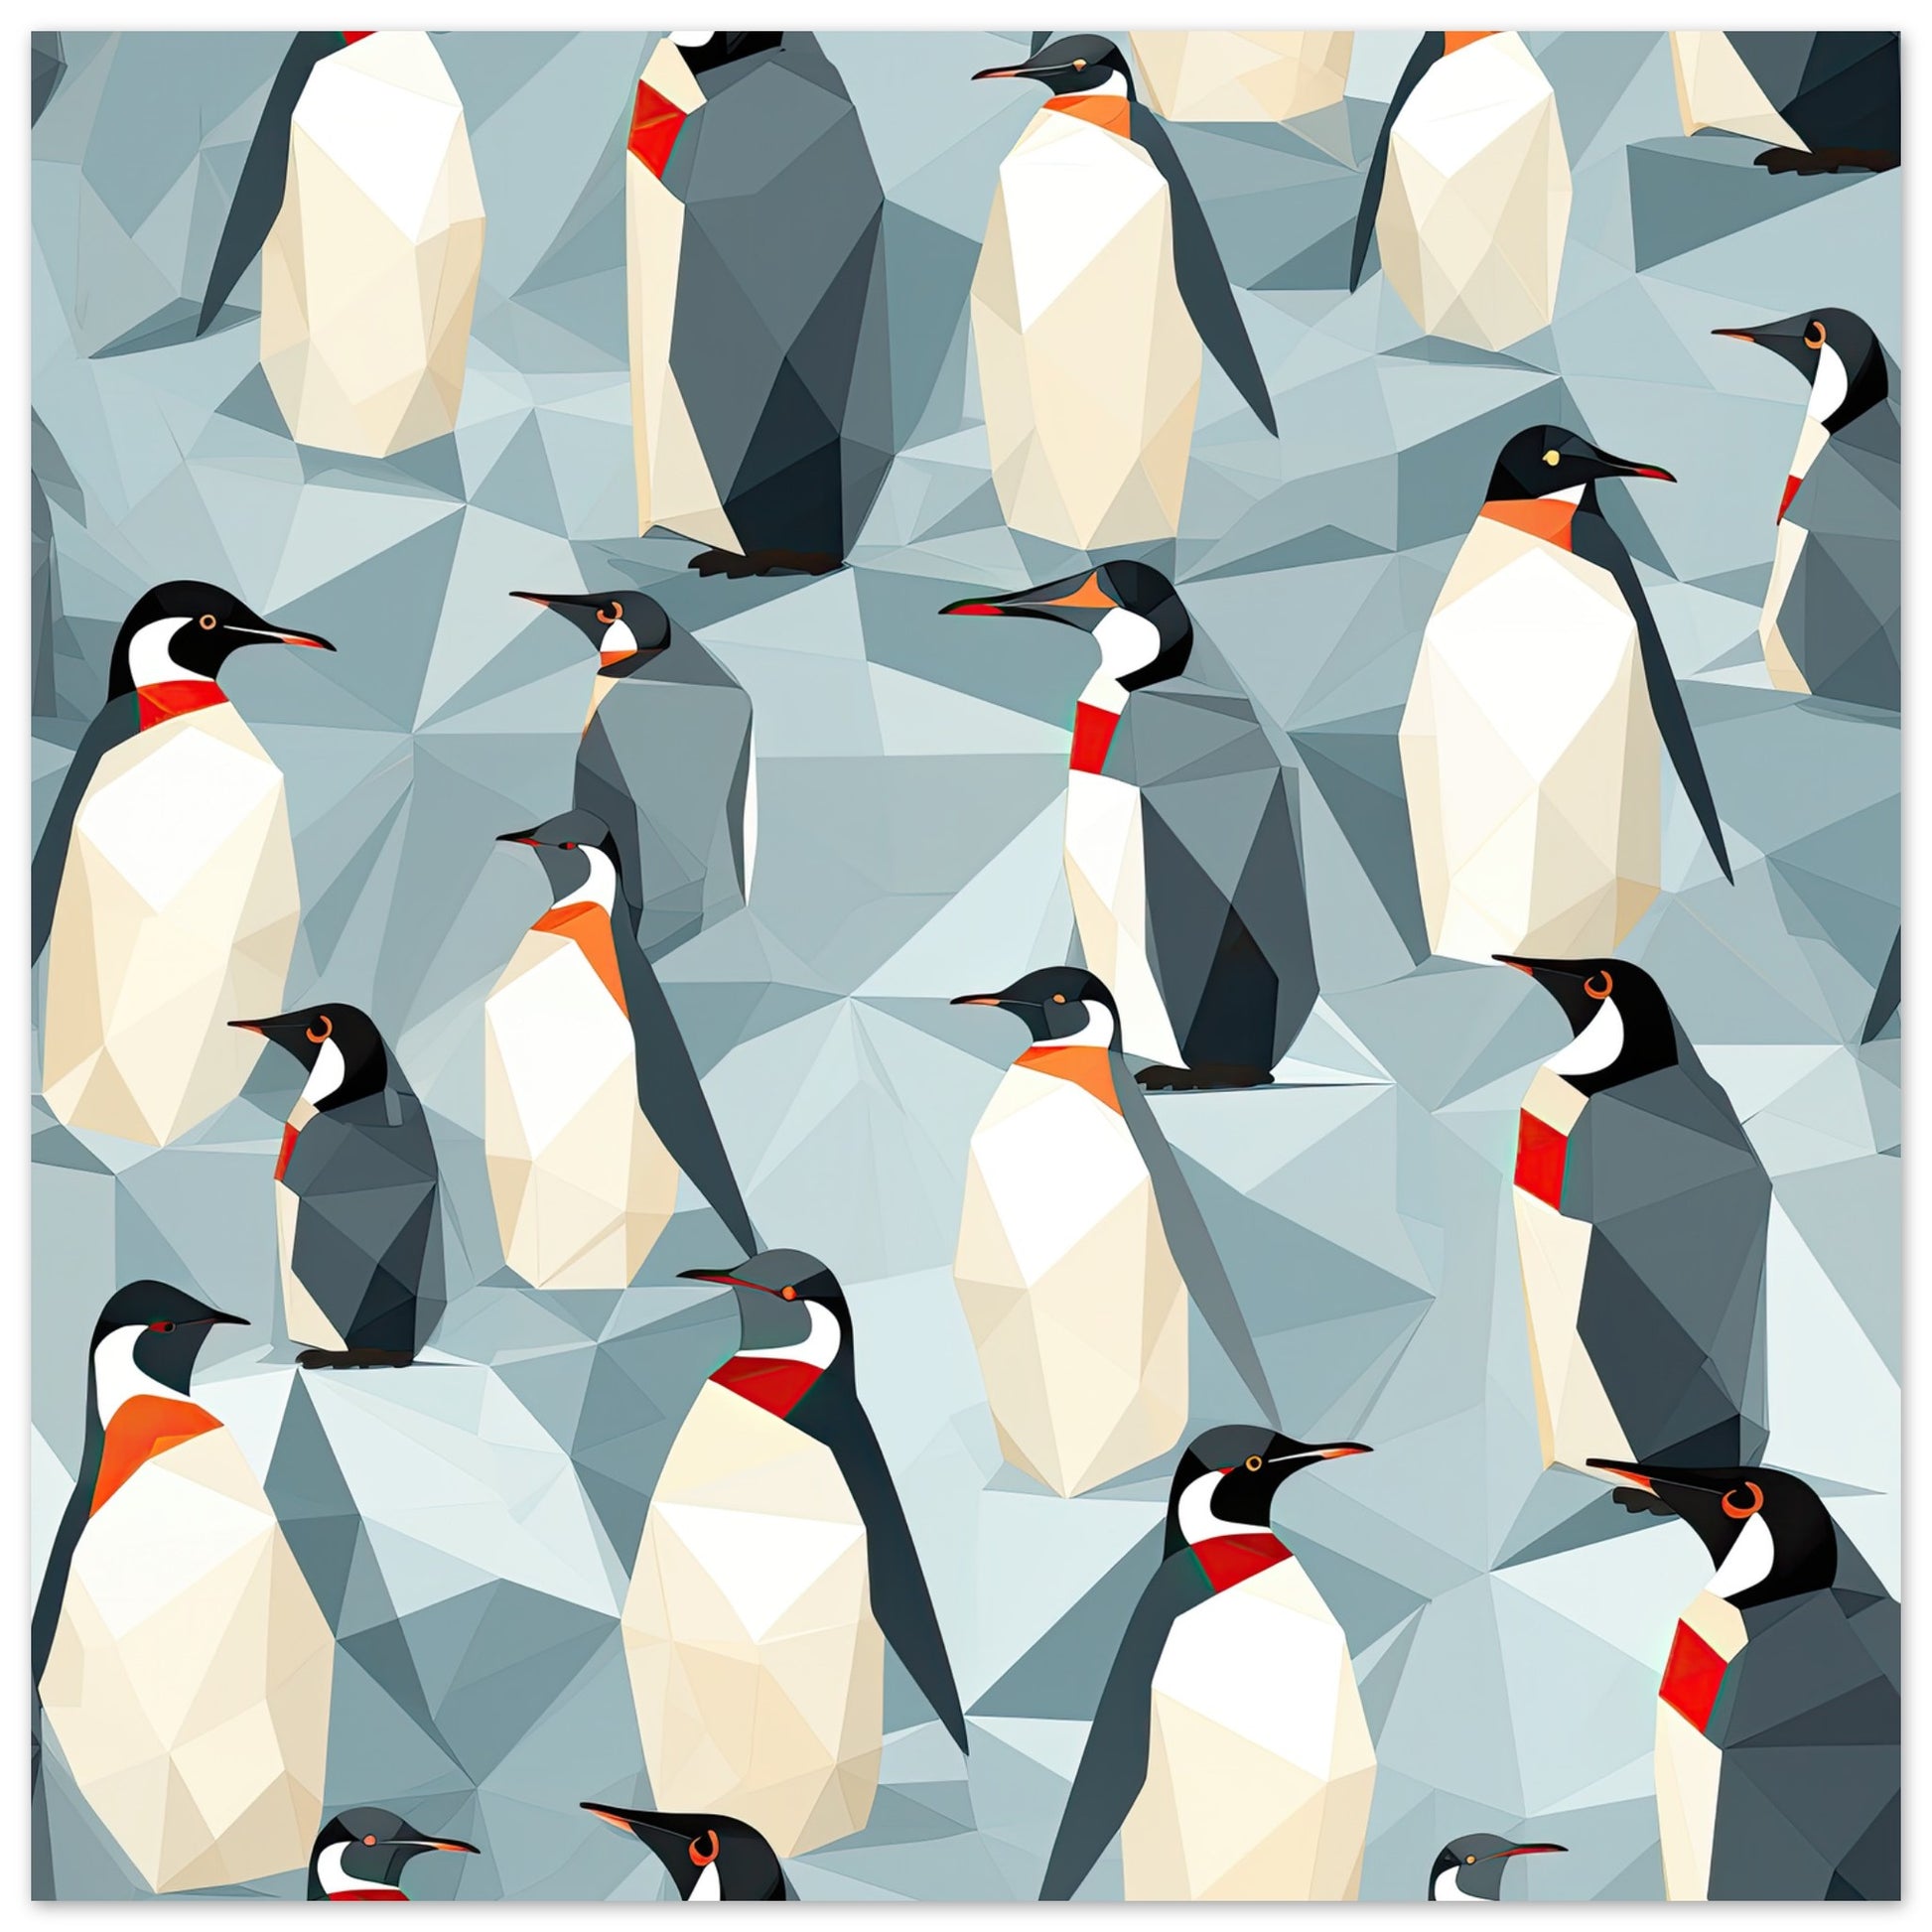 Penguin Convention Artwork AllStyleArt Matte Poster 70x70 cm / 28x28" 